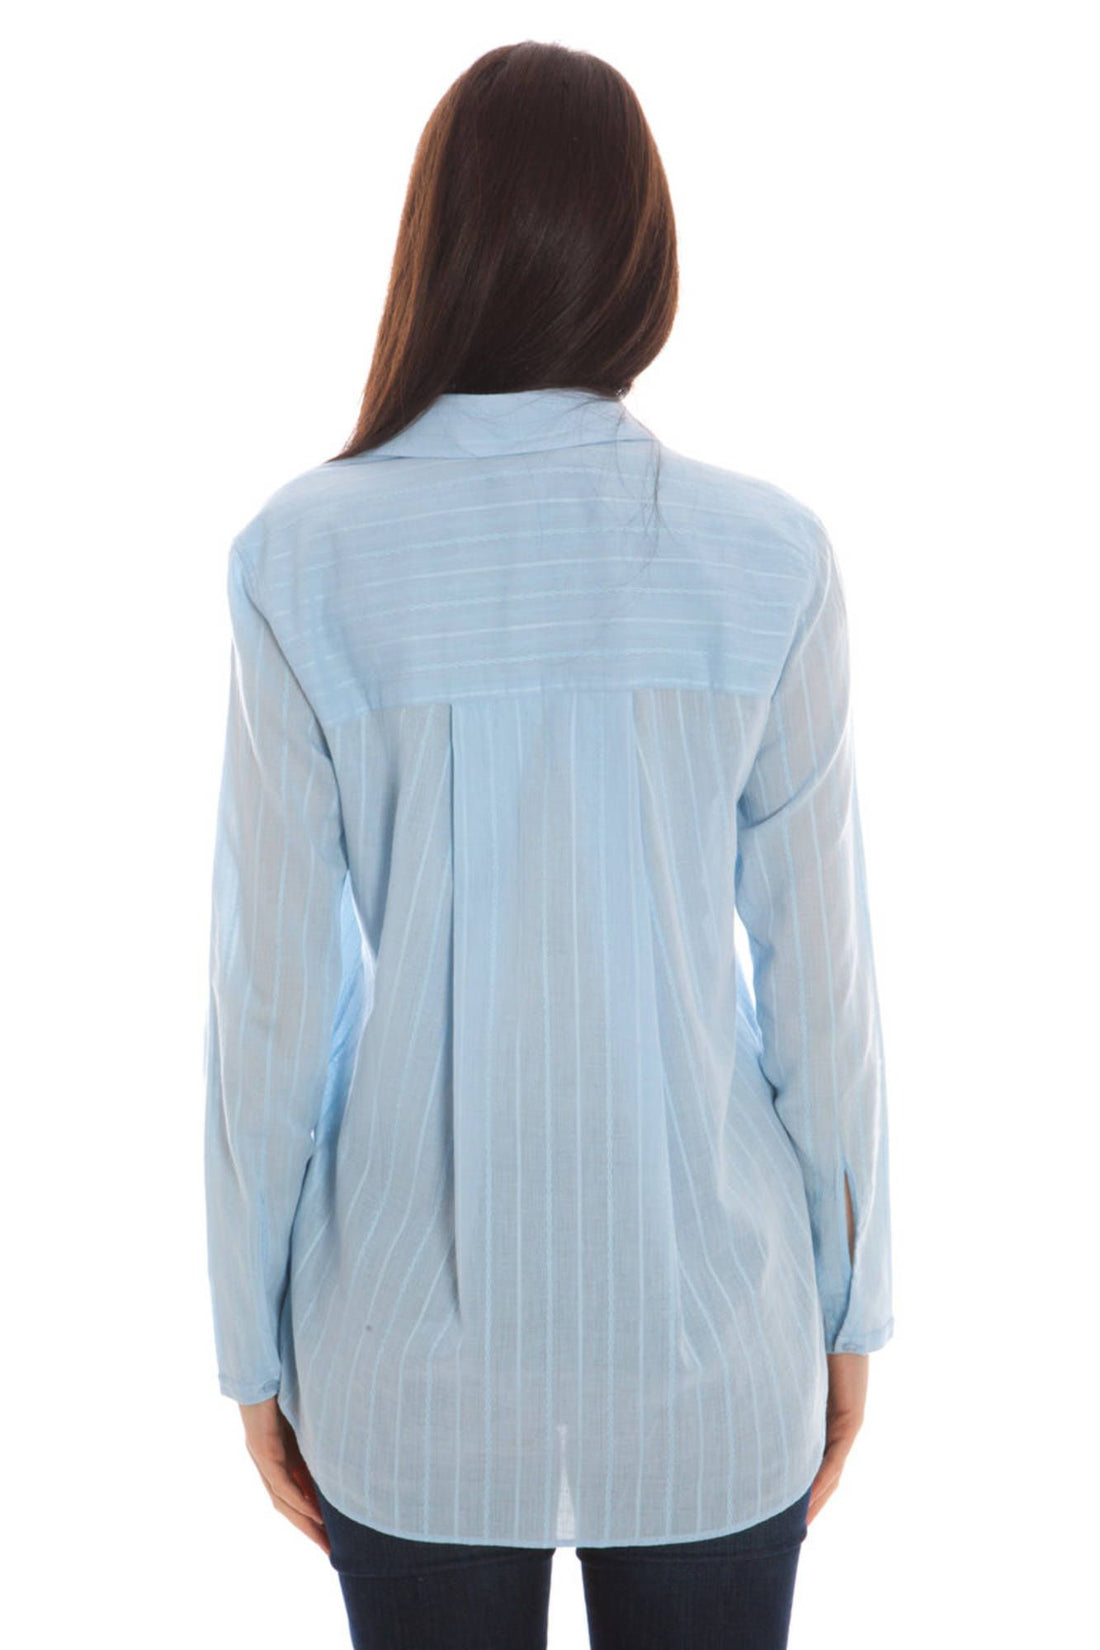 Gant Damen Hemd Bluse Freizeithemd Businesshemd, langarm